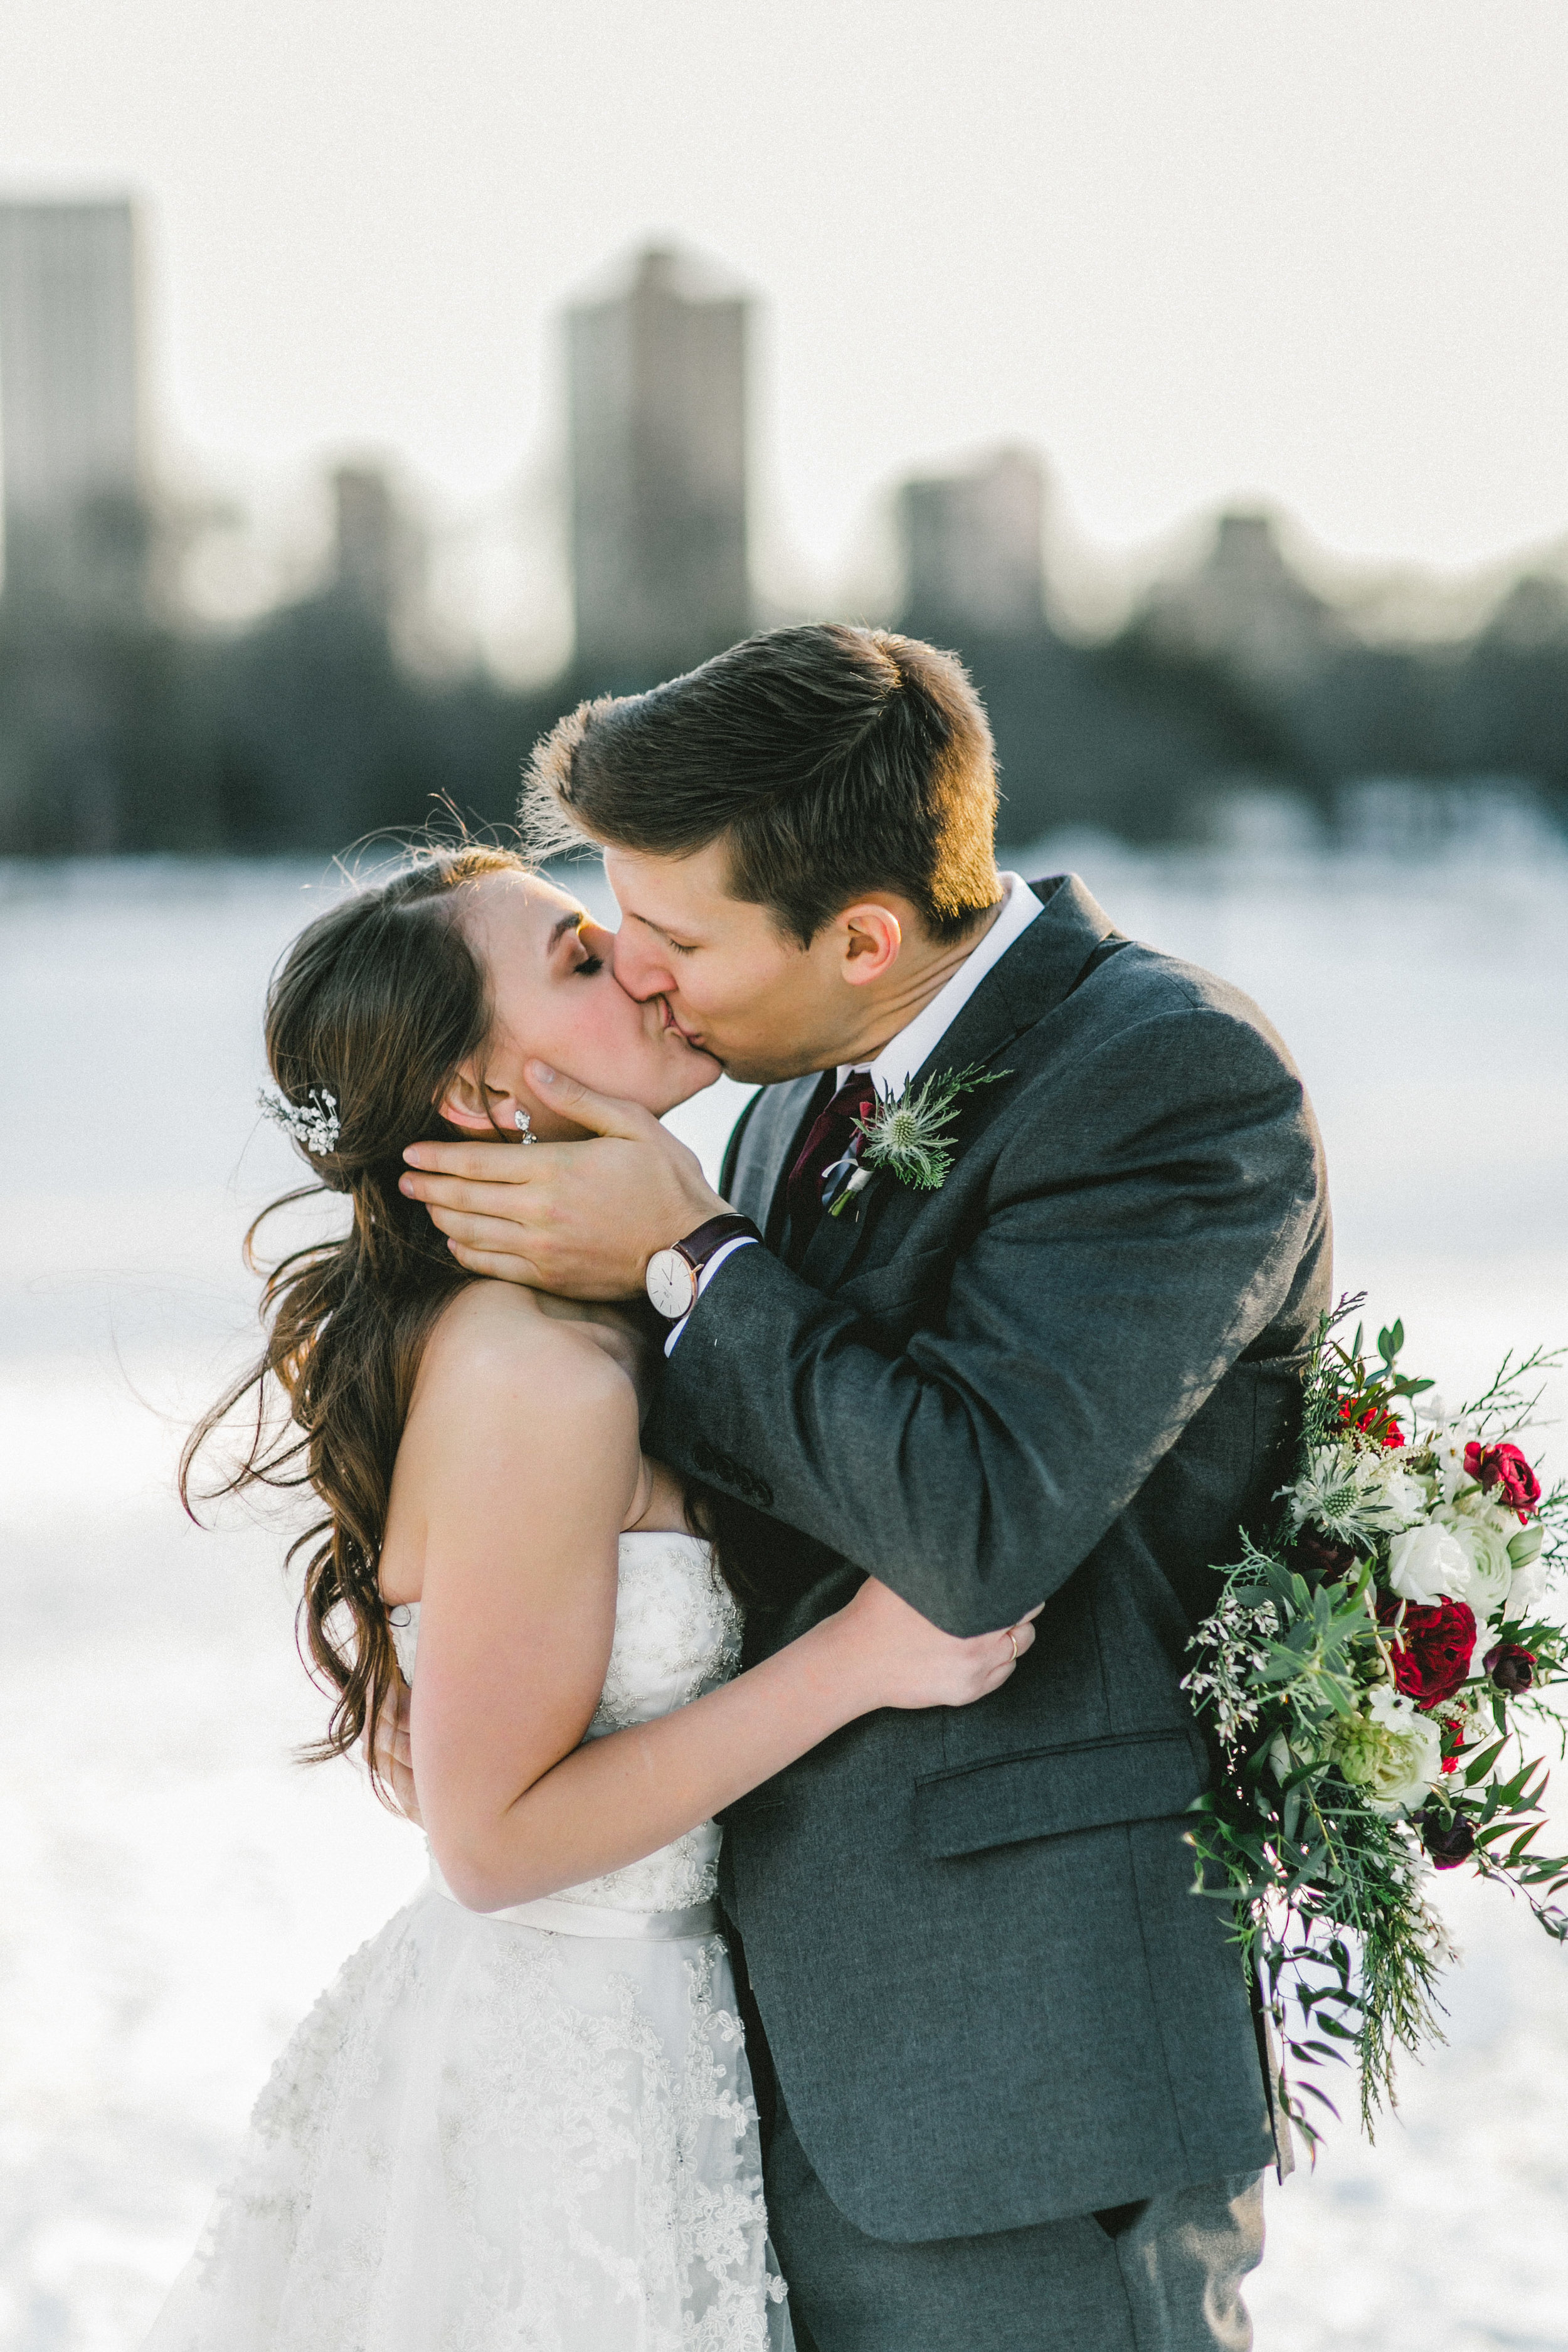 Winter Snowy Wedding Couple Kissing Portrait